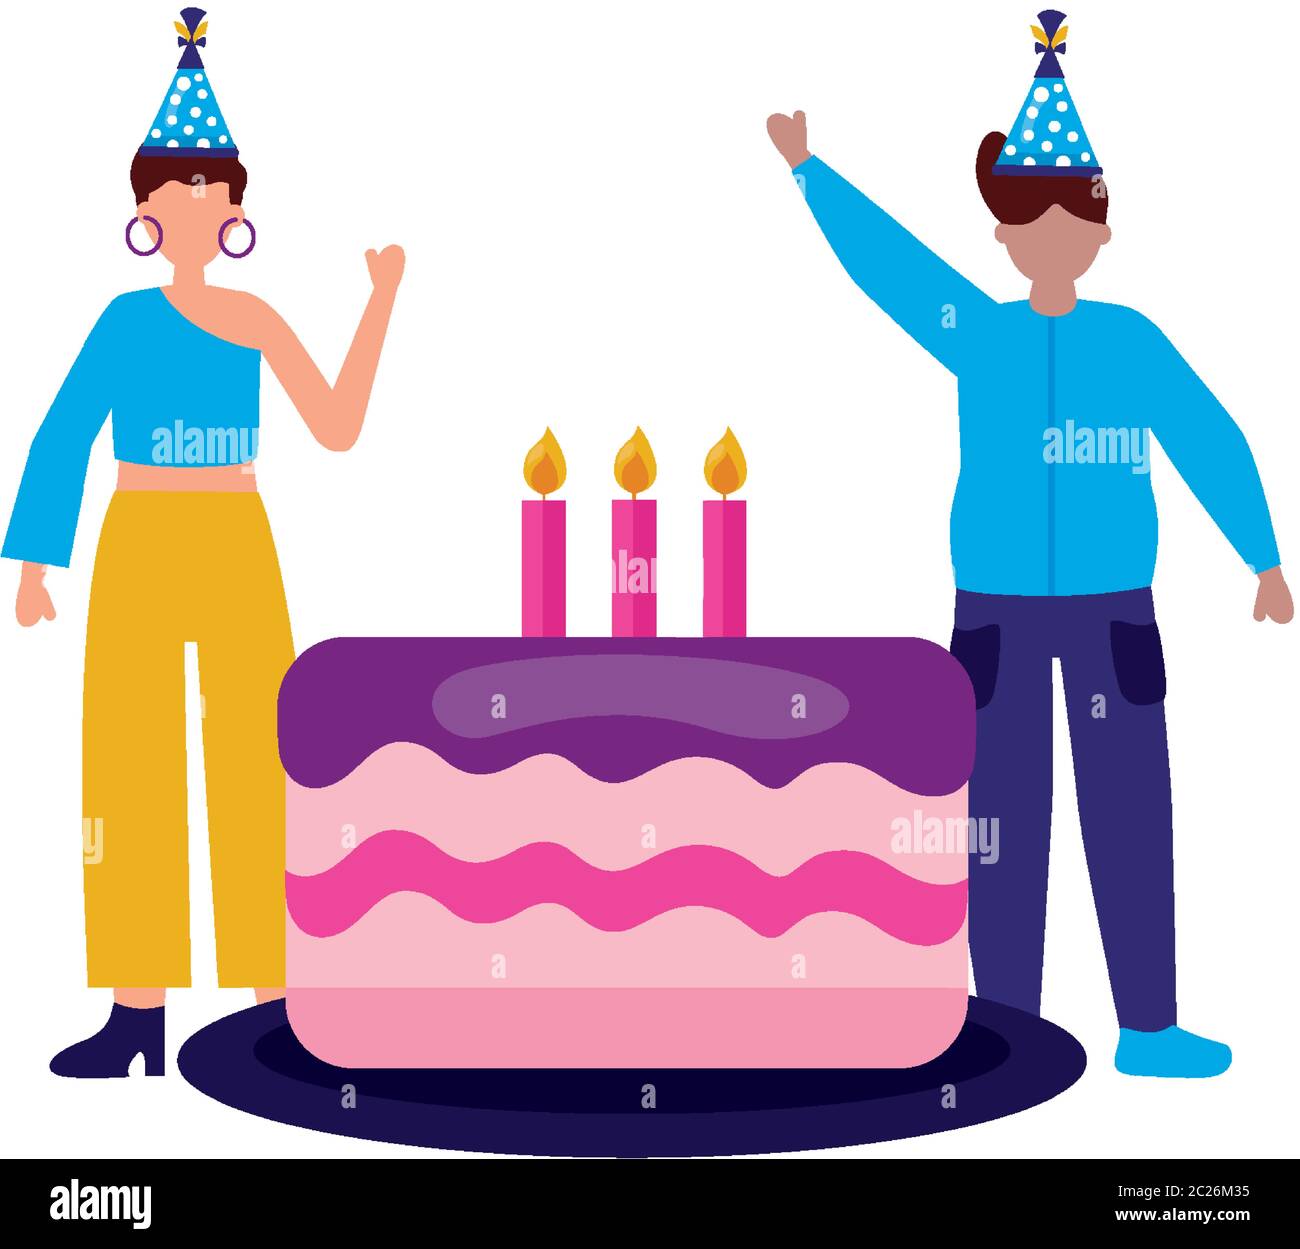 AvatarSeaofBlue on Instagram Lets learn how to say and spell Happy  Birthday in Navi  Huge thanks to neytiritetskaha  wwwYouTubecomAvatarSeaofBlue  Avatar 